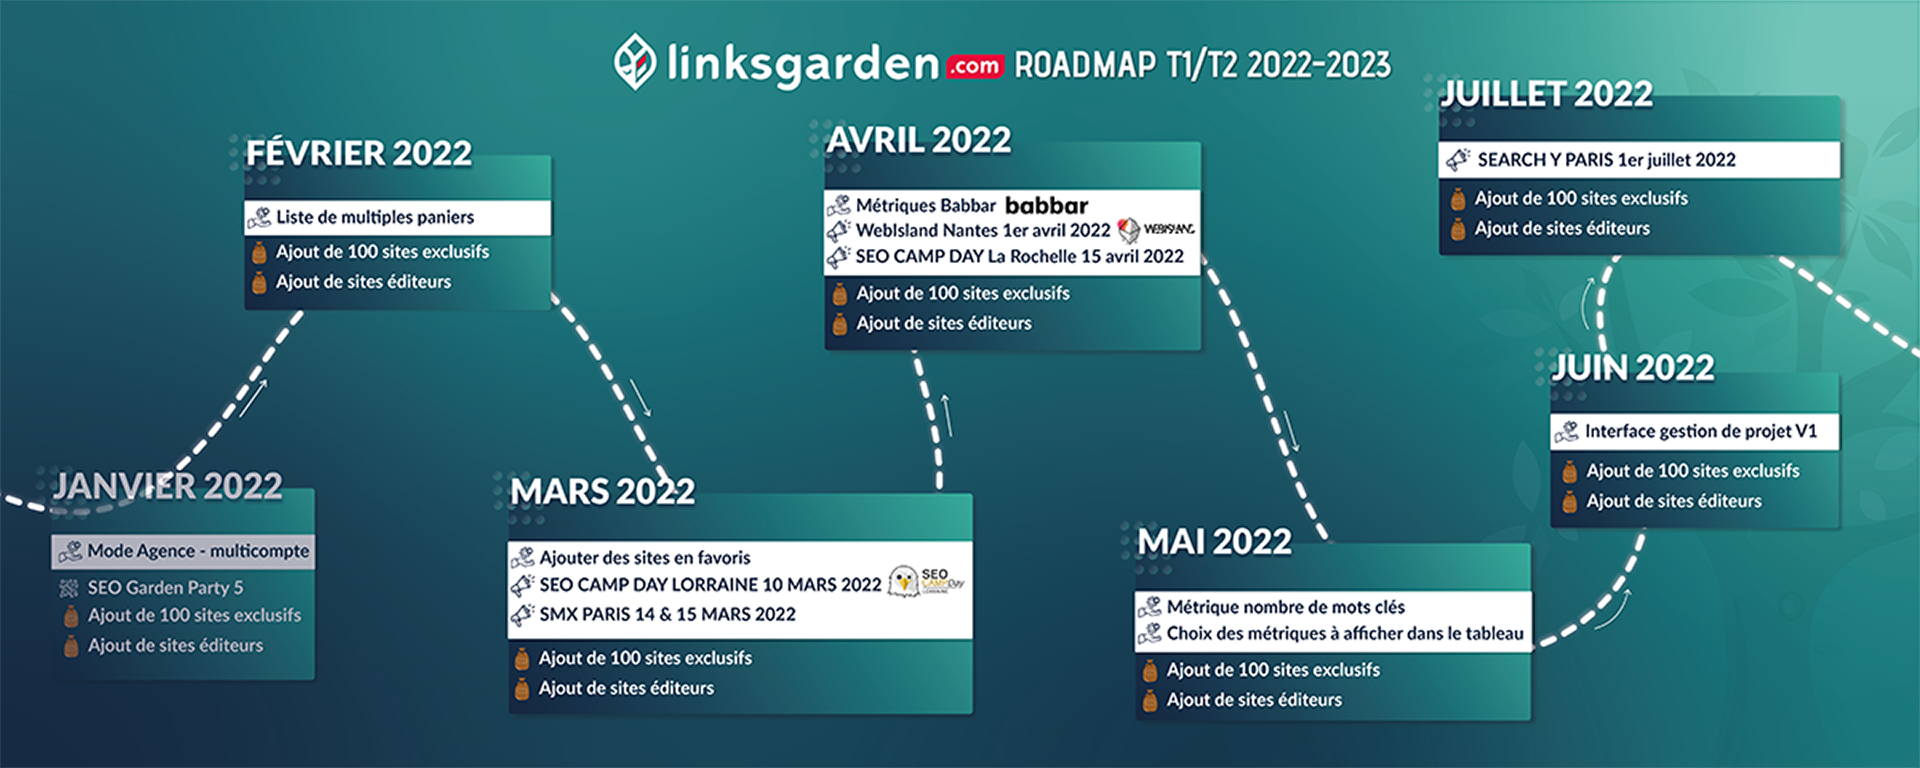 roadmap linksgarden semestre 1 2022